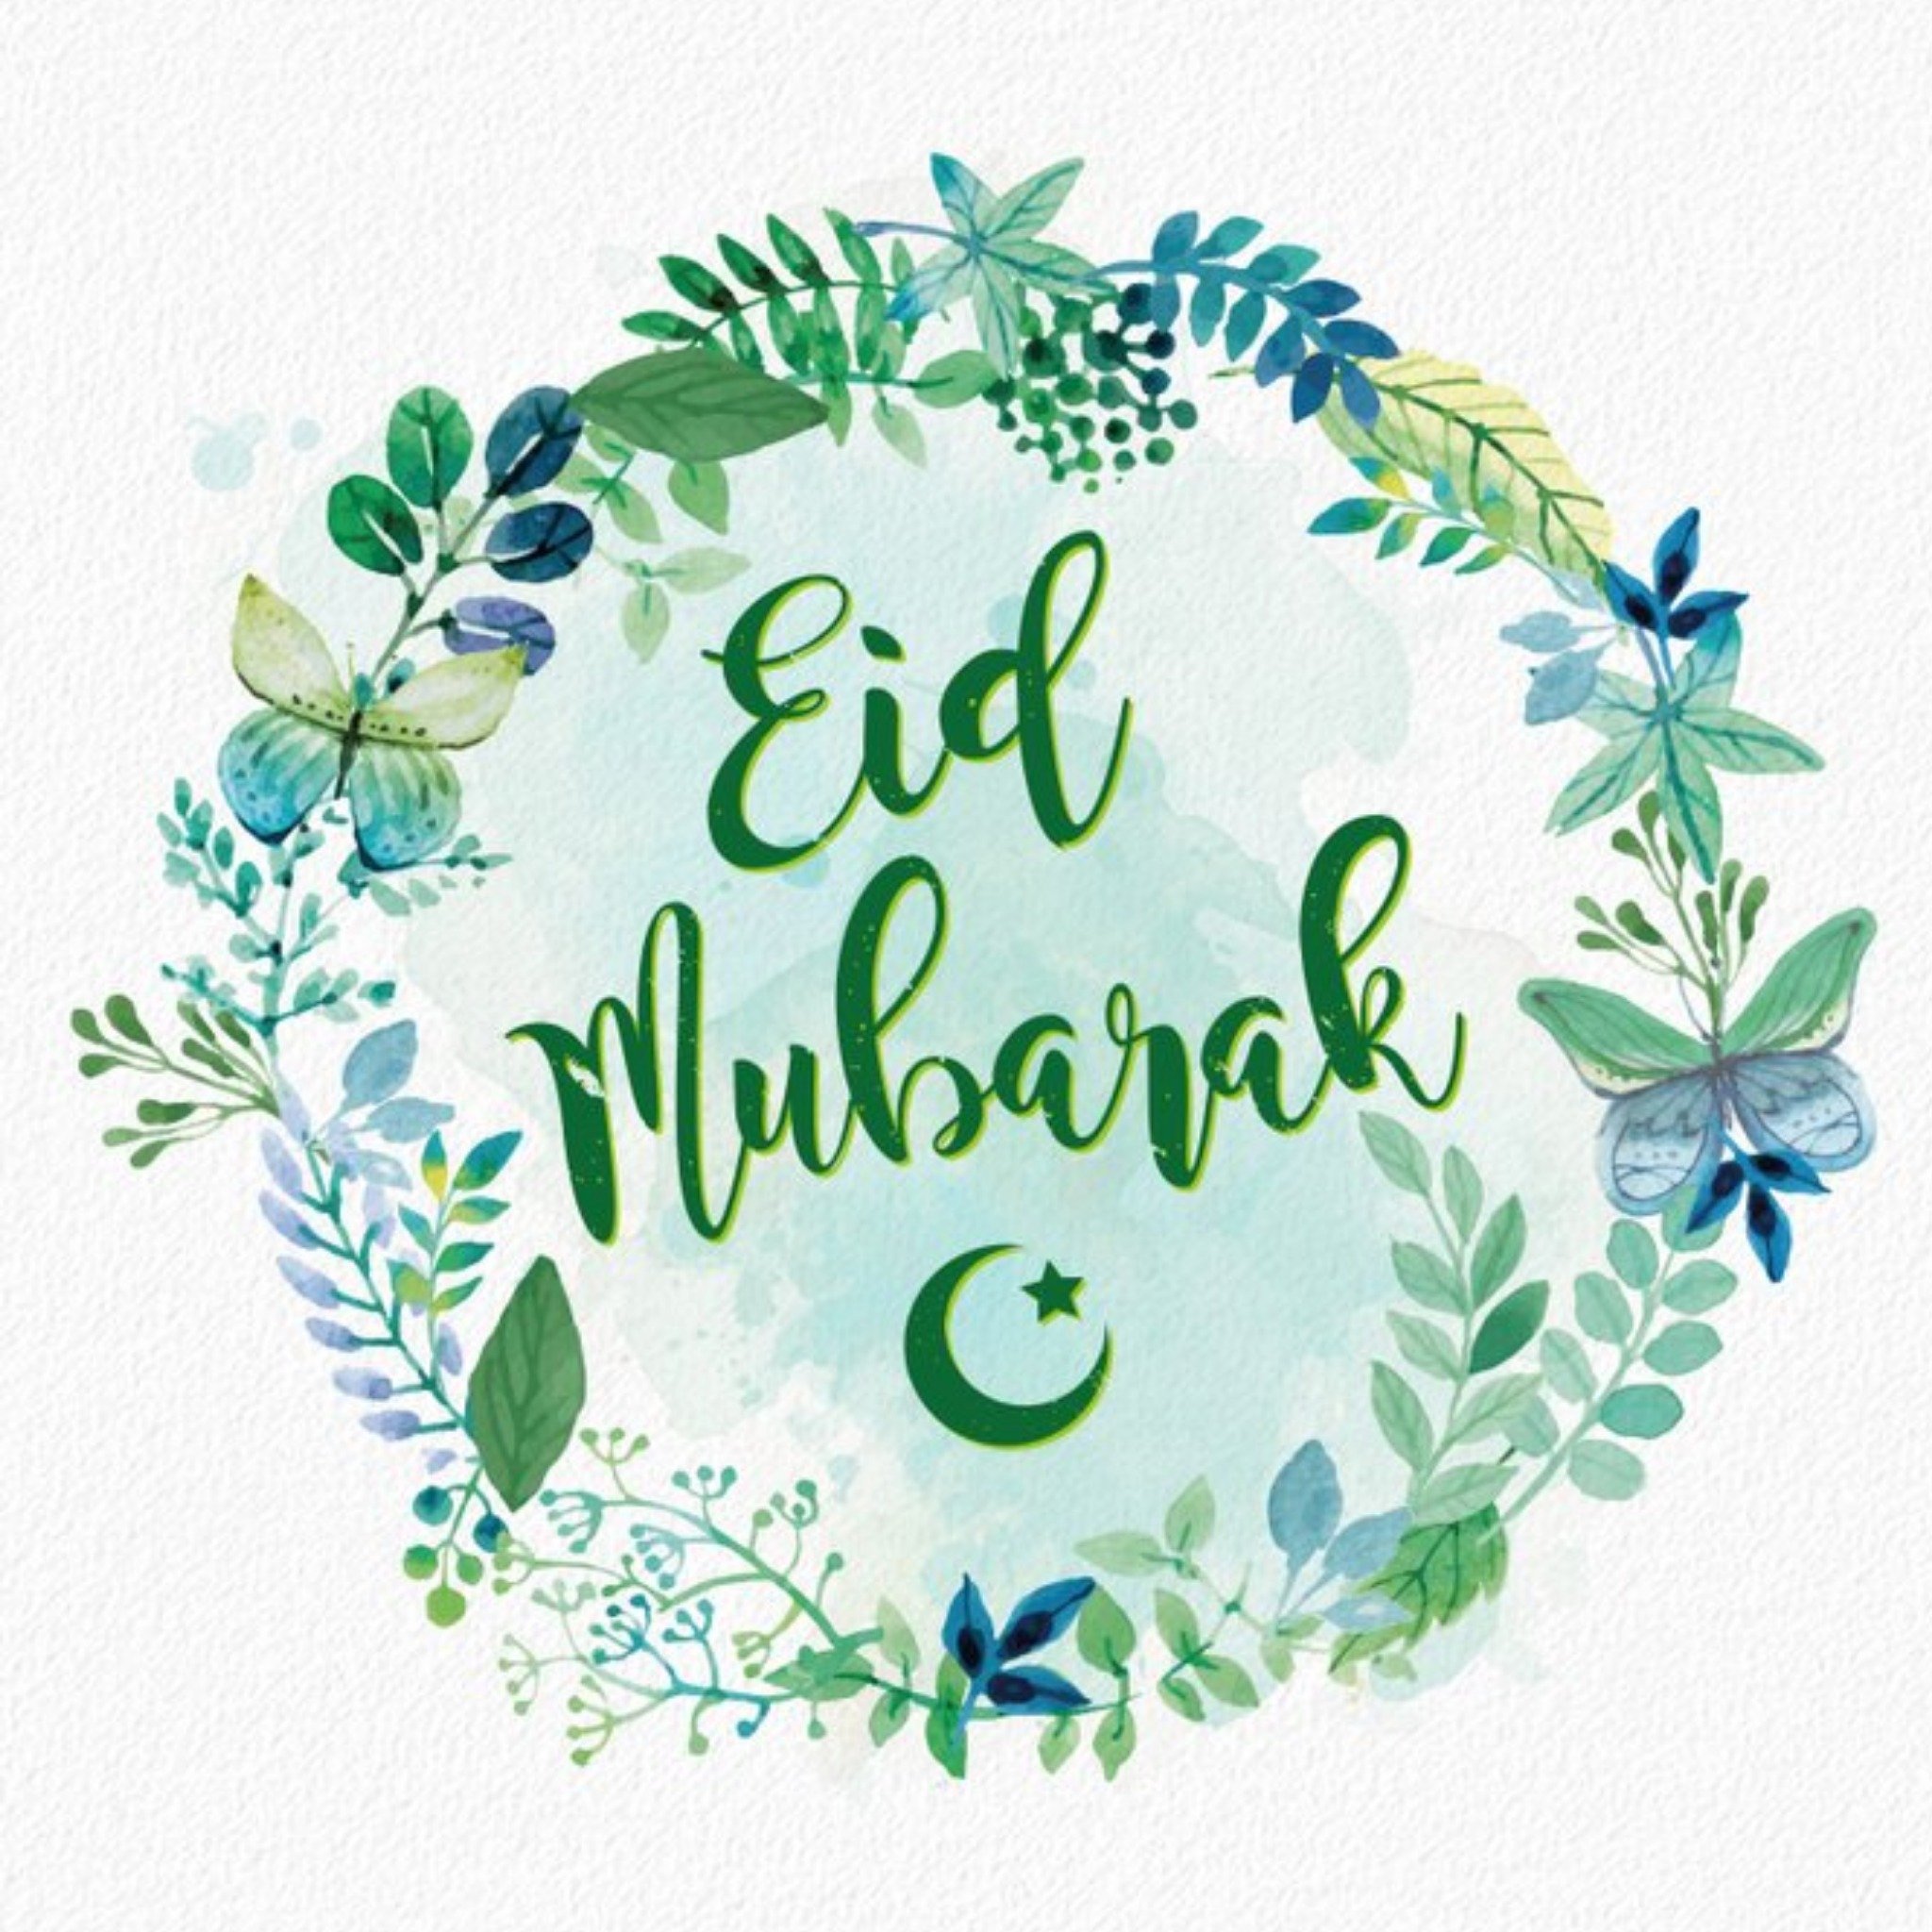 Moonpig Eid Mubarak Colourful Pretty Floral Card, Square